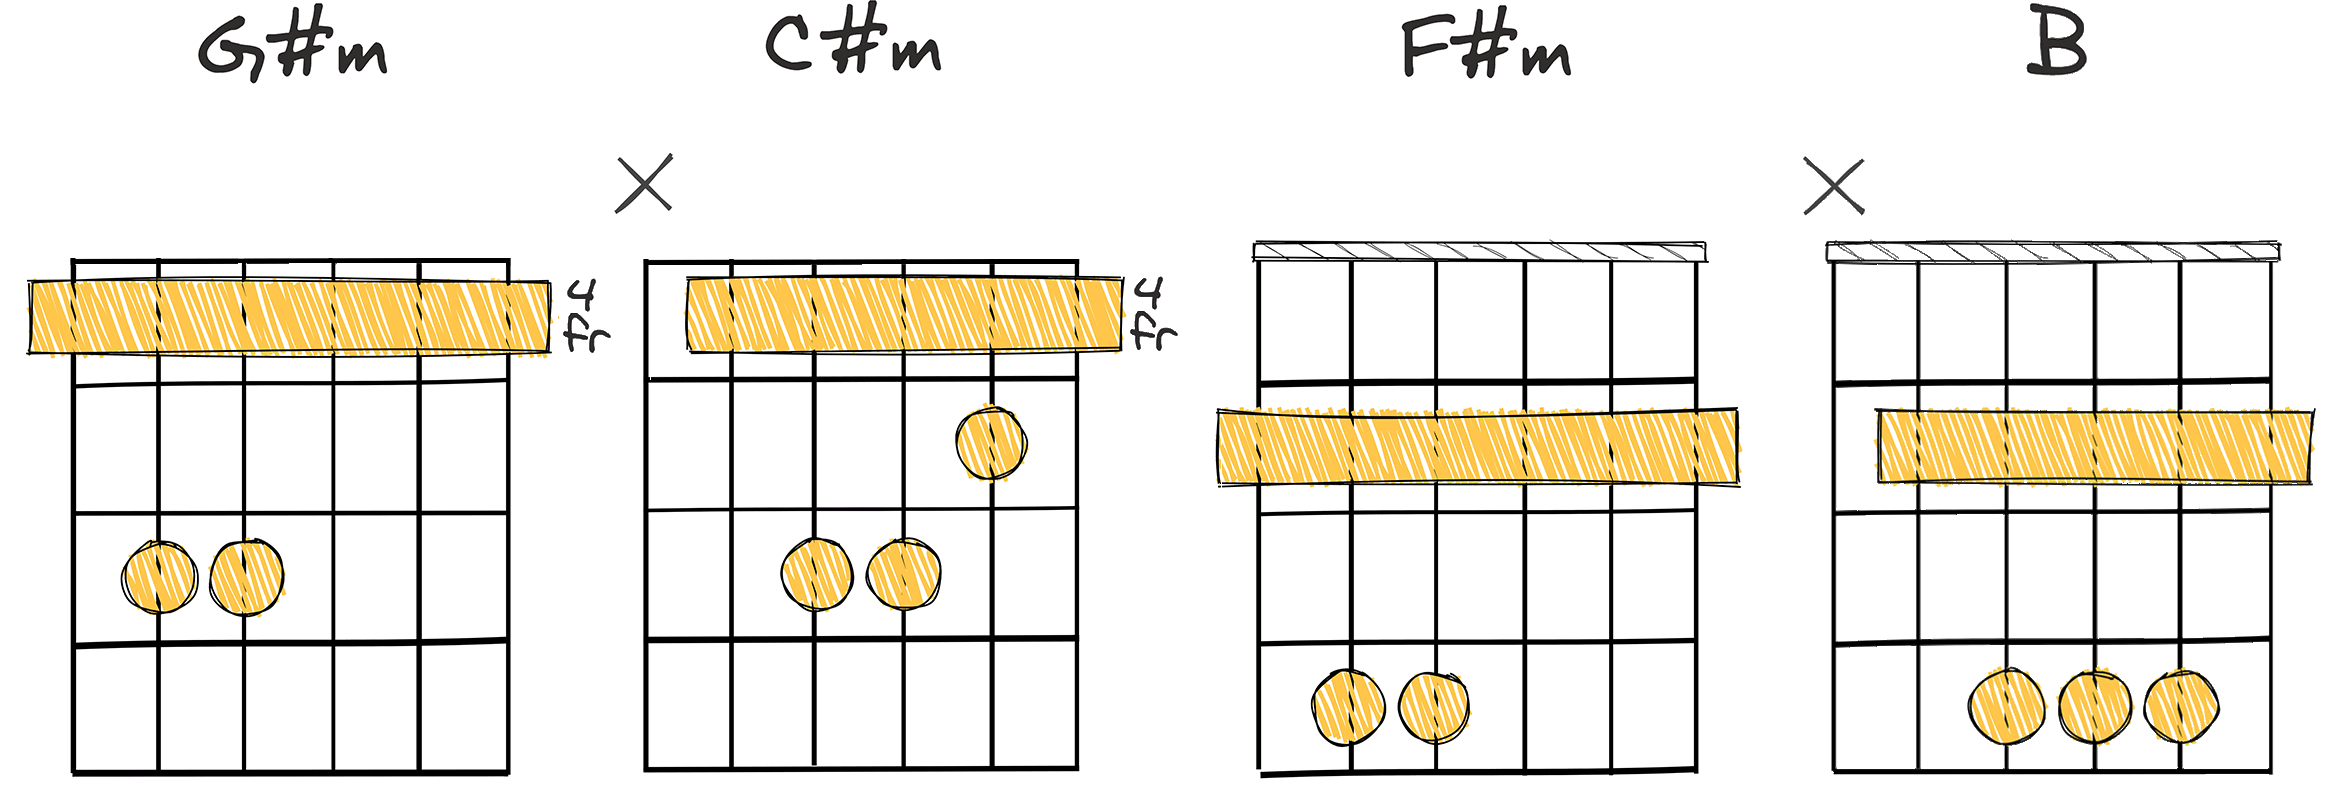 III-VI-II-V (3-6-2-5) chords diagram